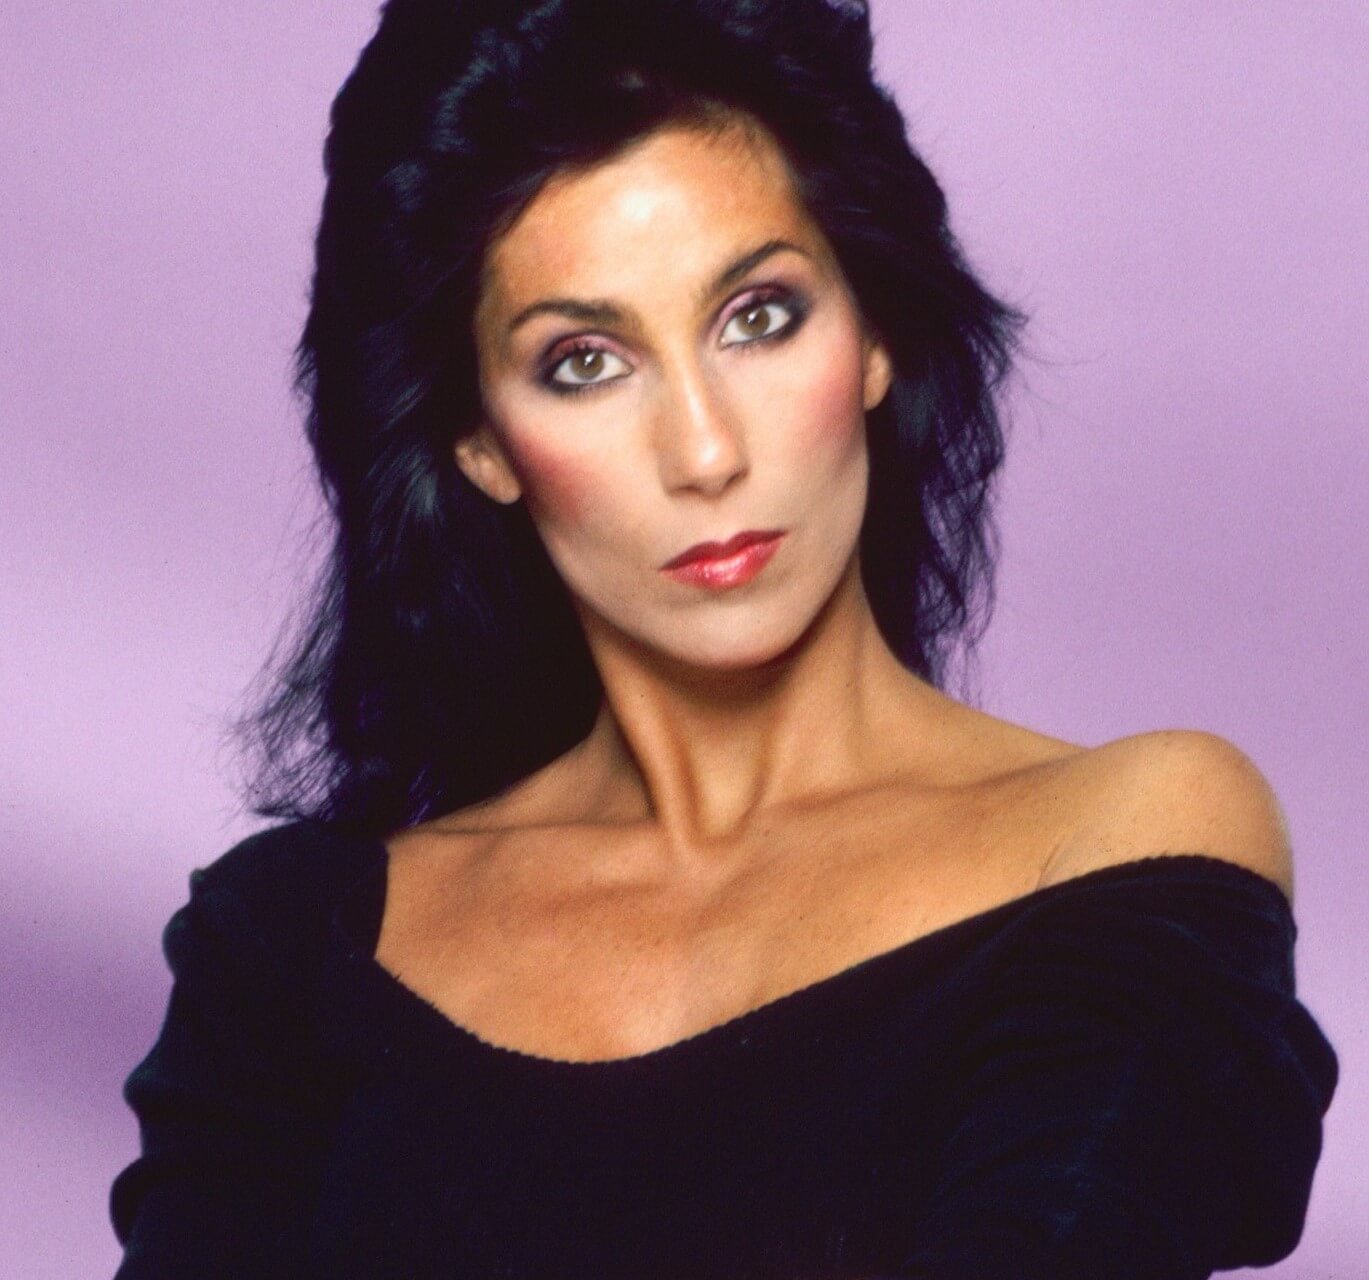 "Believe" singer Cher wearing black